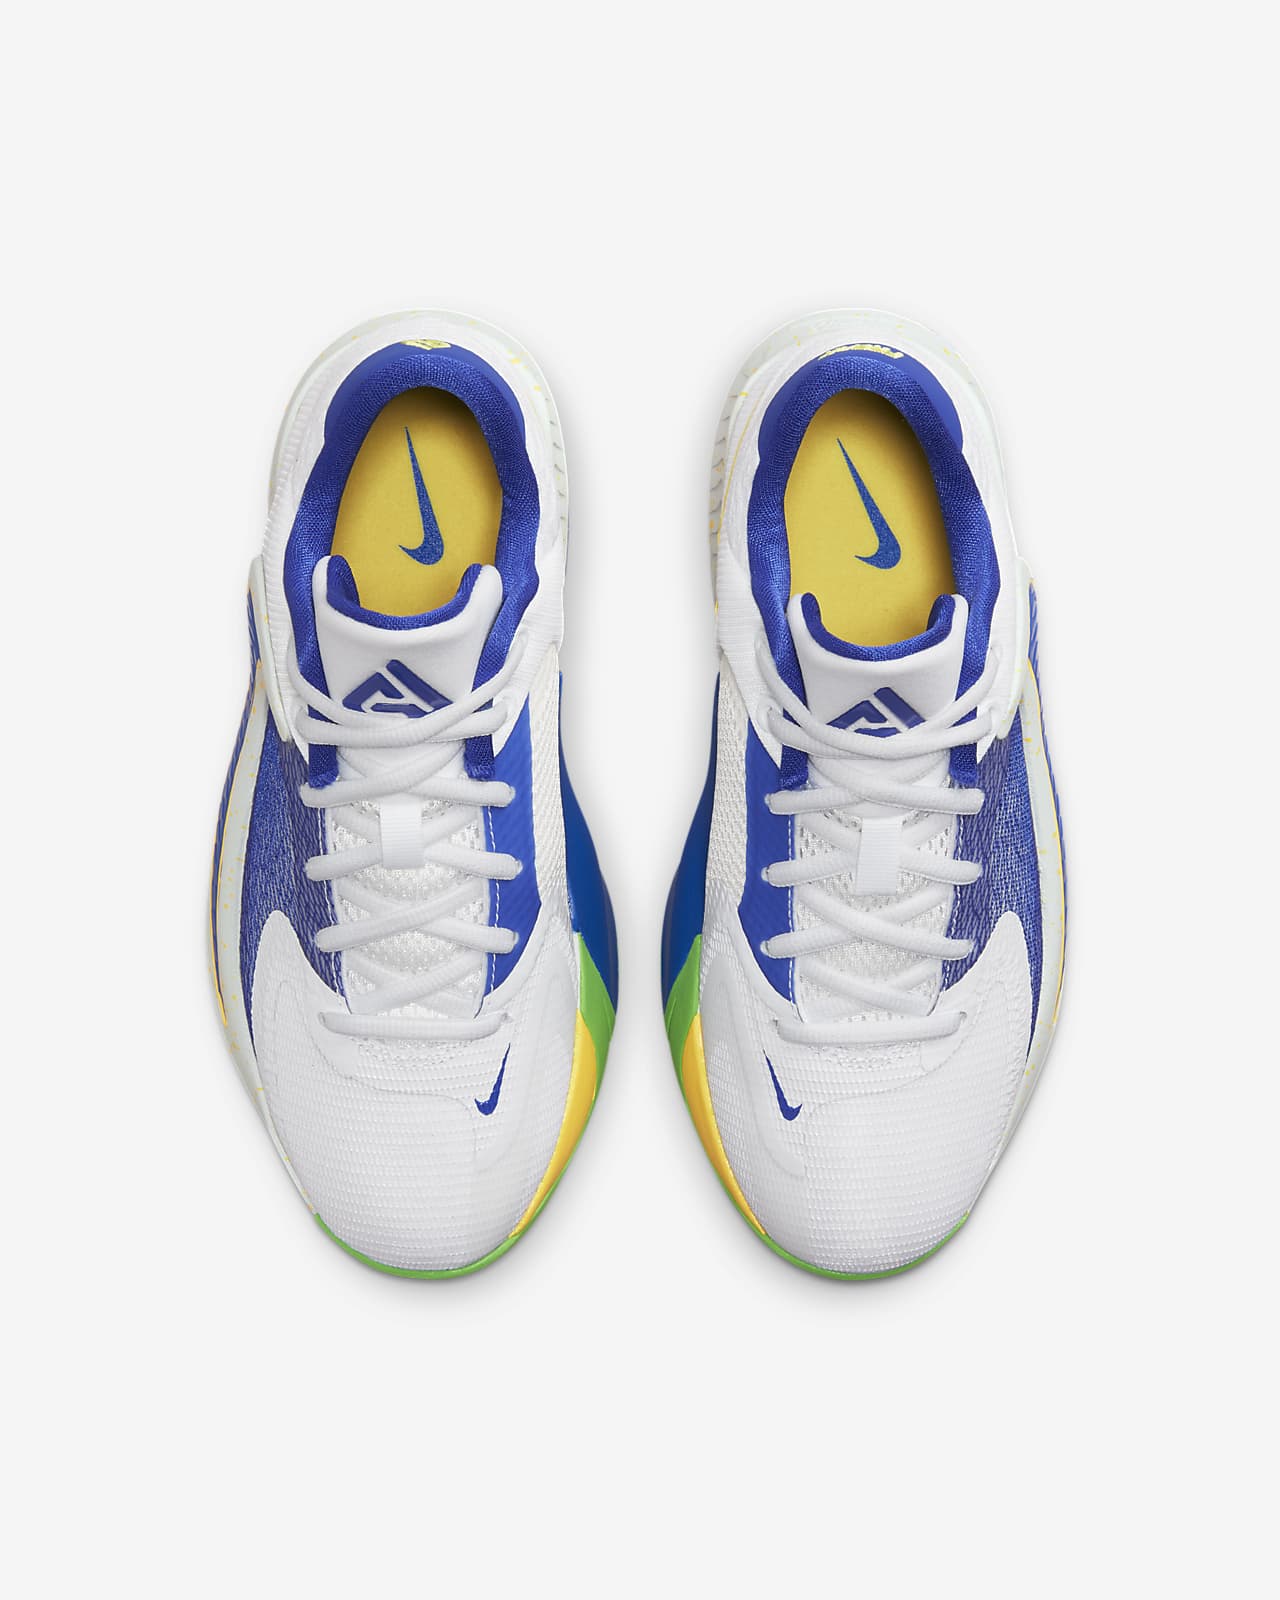 Nike Zoom Freak 4 Basketball Shoes